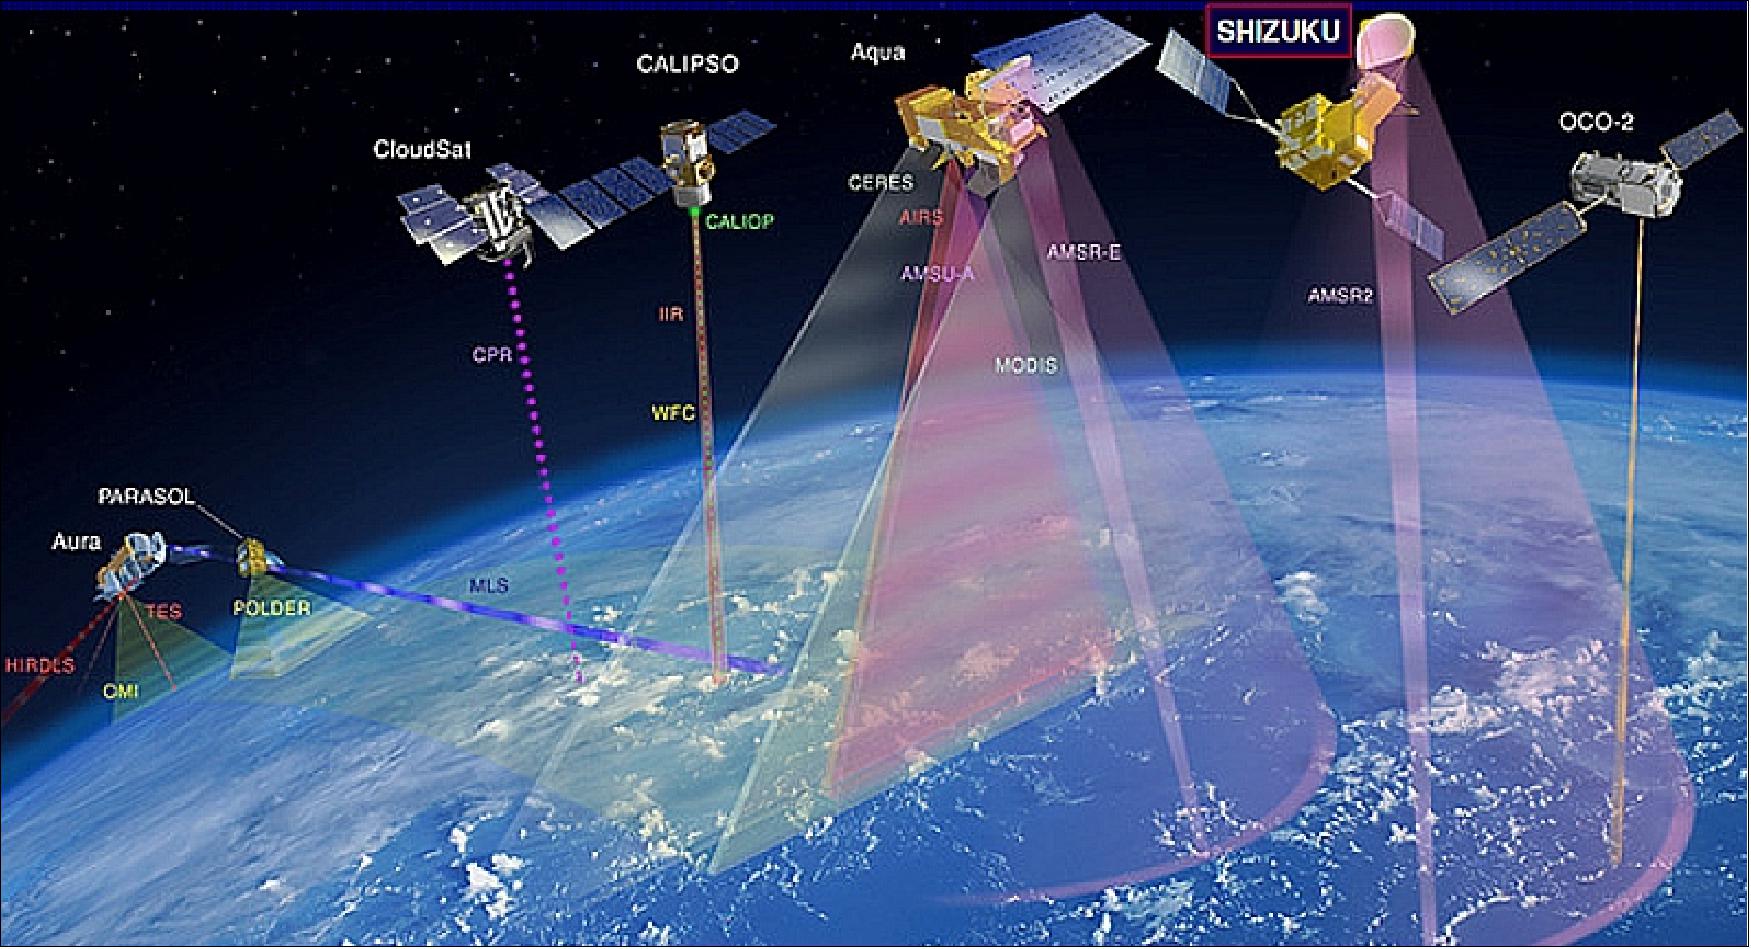 Figure 6: The GCOM-W1 (Shizuku) satellite in the A-train constellation (image credit: NASA, JAXA) 28)